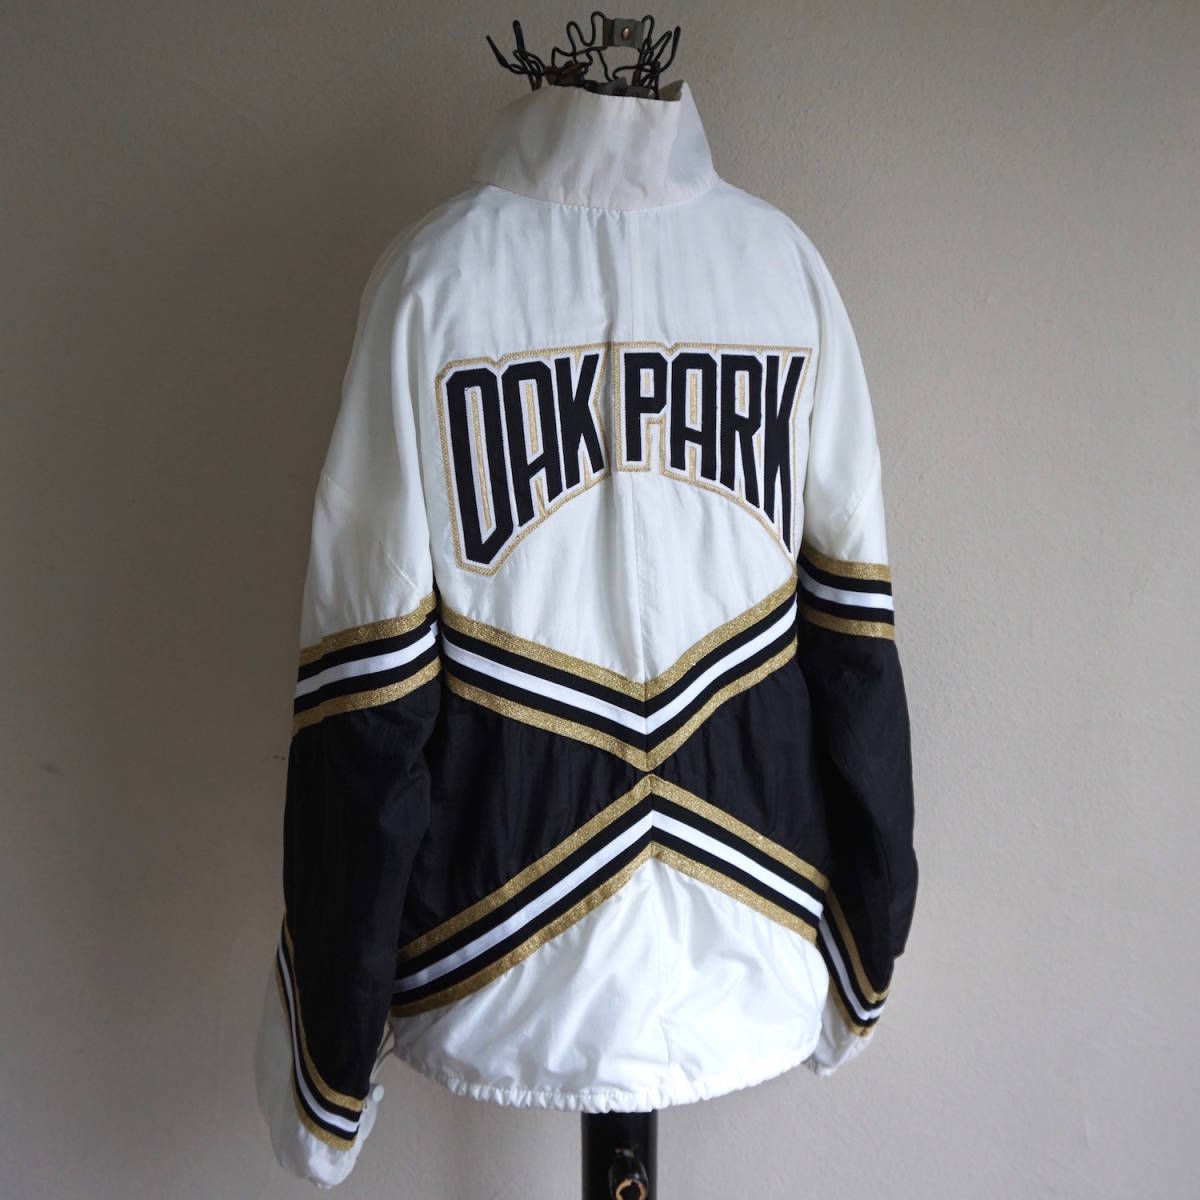 1990s~2000s Vintage USA made VARSITY Cheery da- nylon jersey L white black gold Roo z Fit oak park America old clothes 